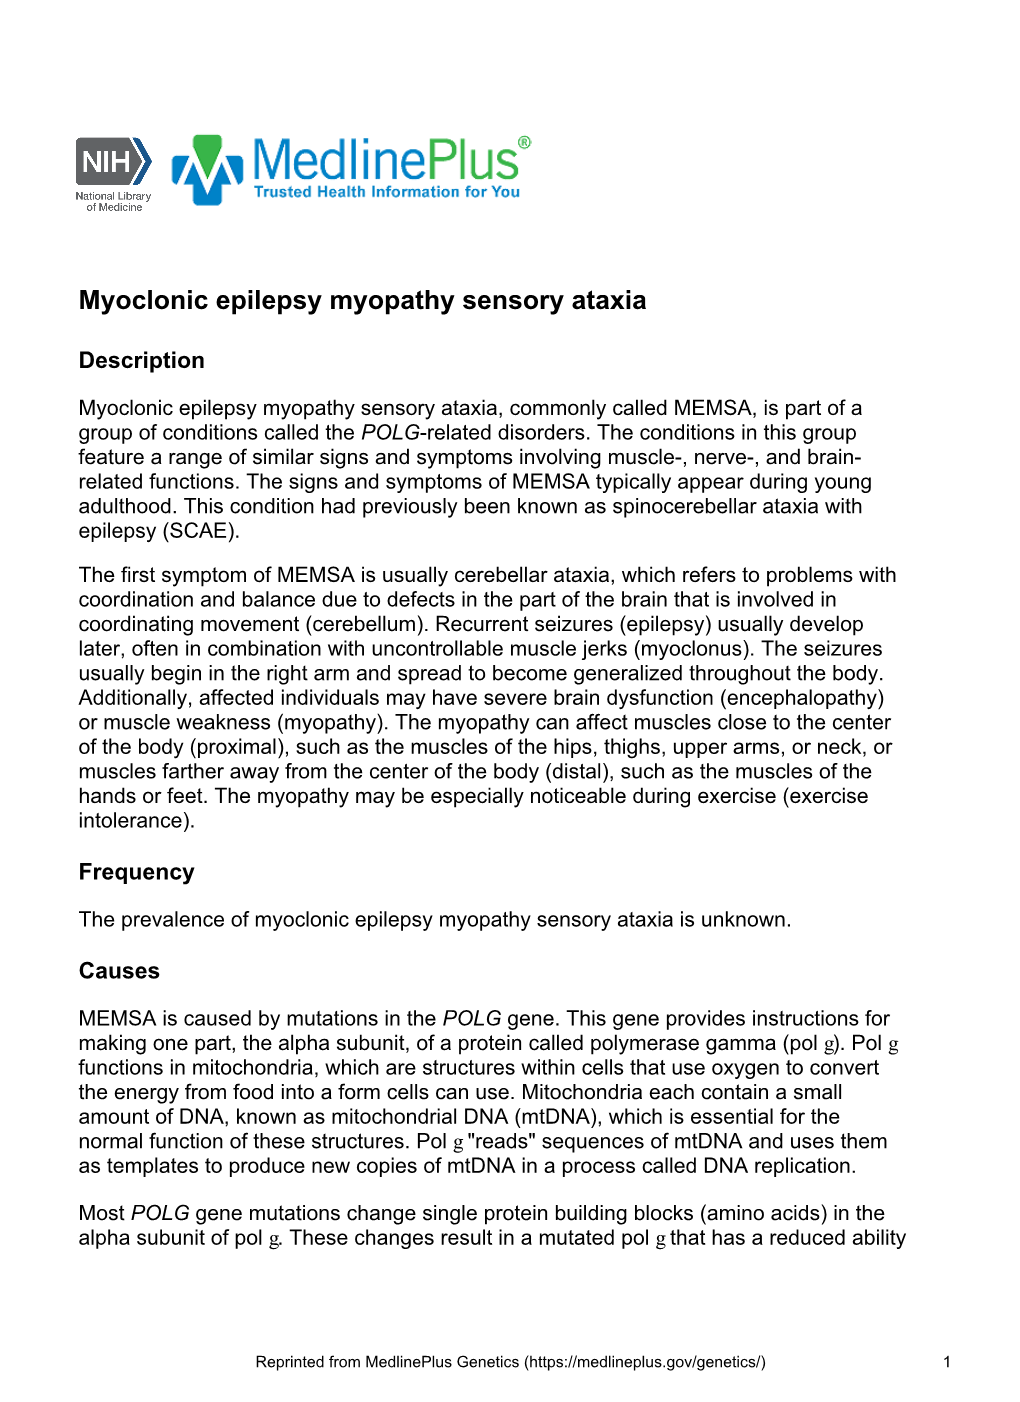 Myoclonic Epilepsy Myopathy Sensory Ataxia